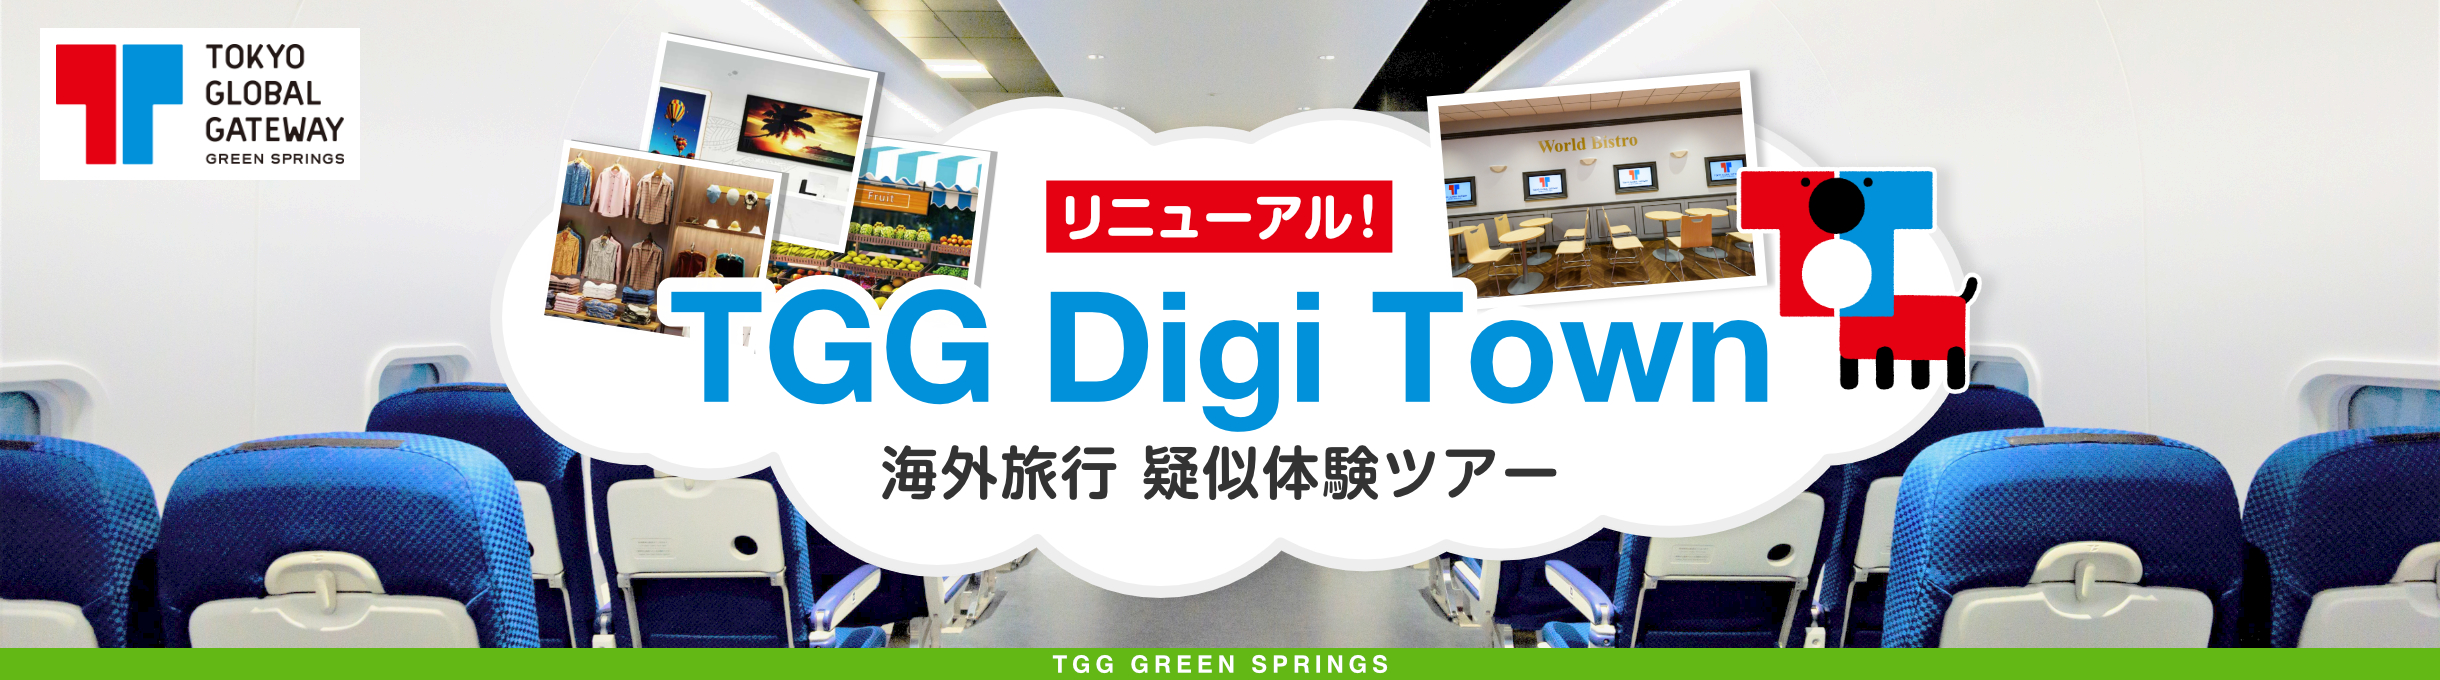 TGG Digi Town 海外旅行 疑似体験ツアー TGG GREEN SPRINGS